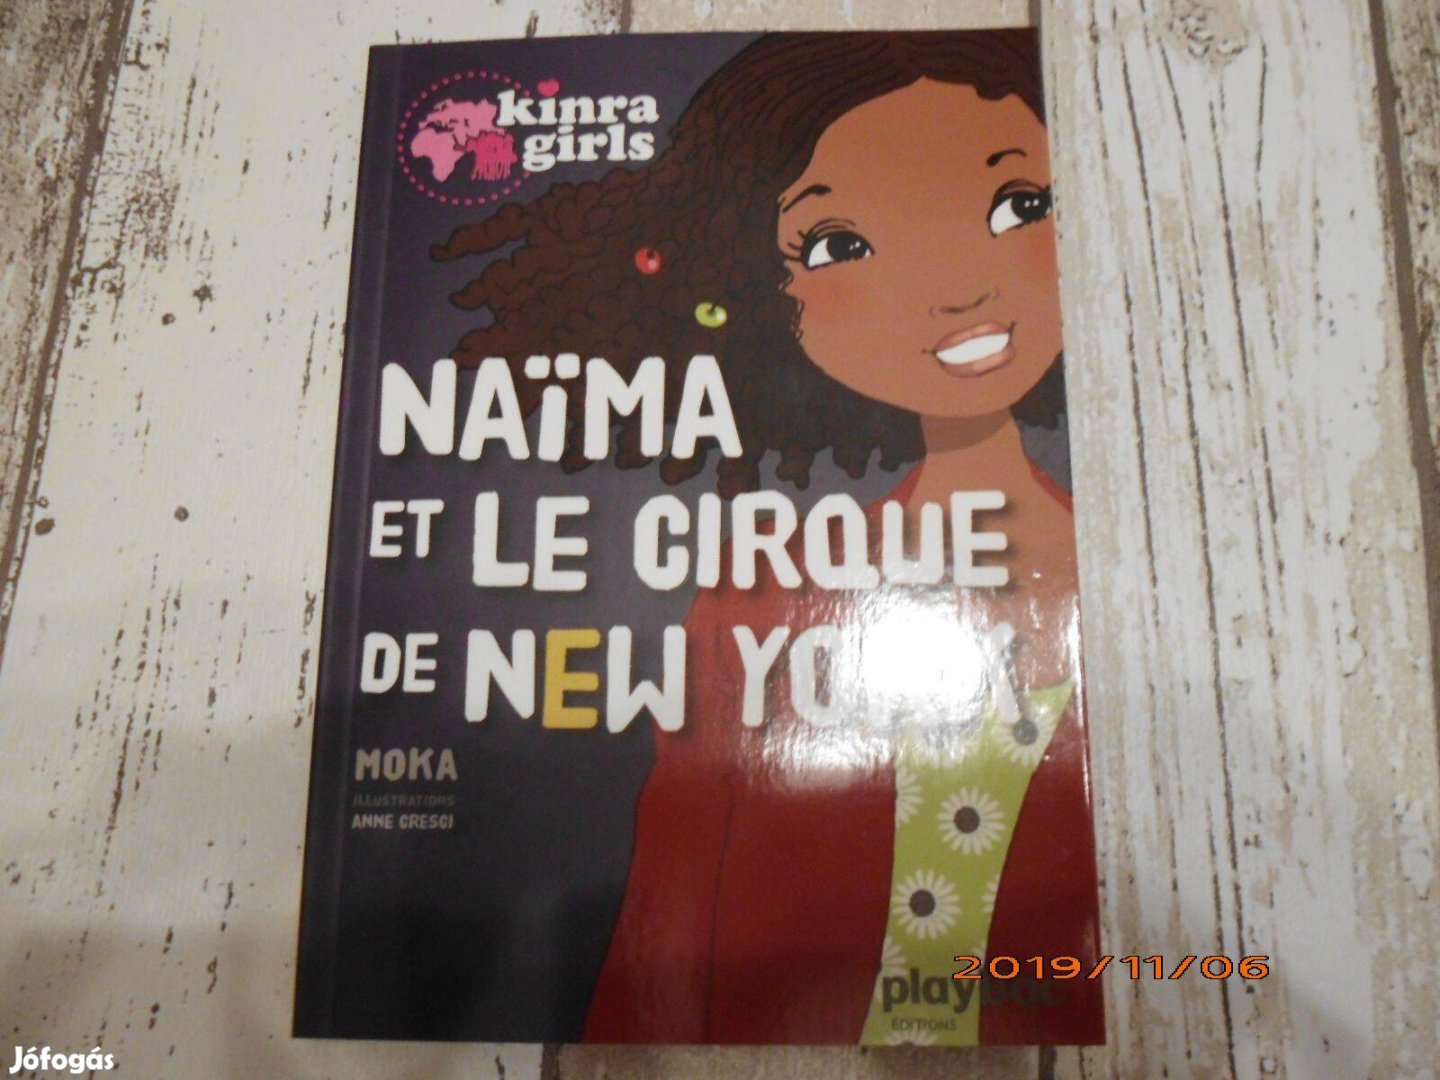 Kinra girls: Naima története francia nyelven